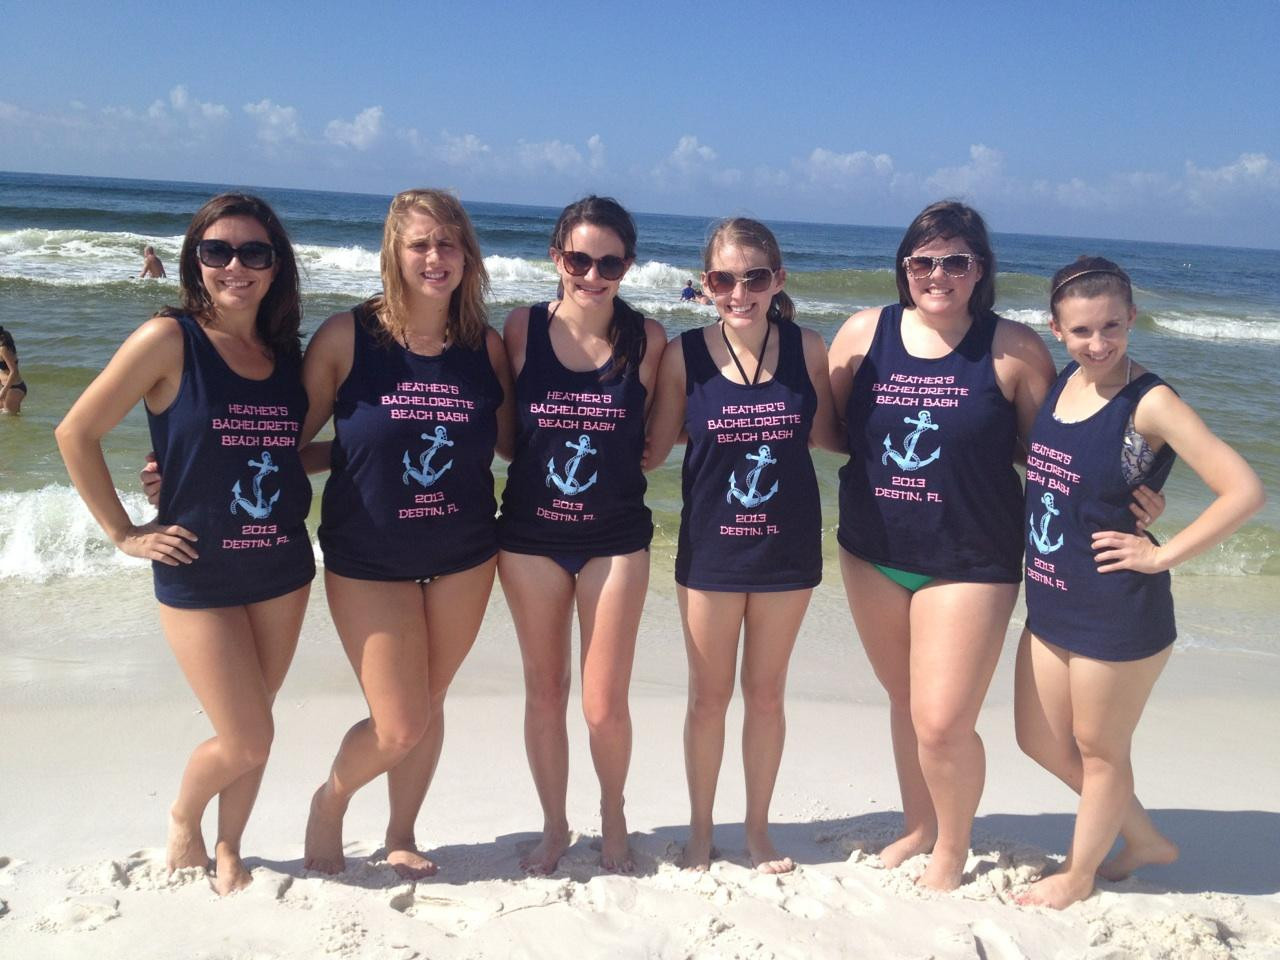 Bachelorette Party Beach Ideas
 Custom T Shirts for Bachelorette Beach Bash Shirt Design